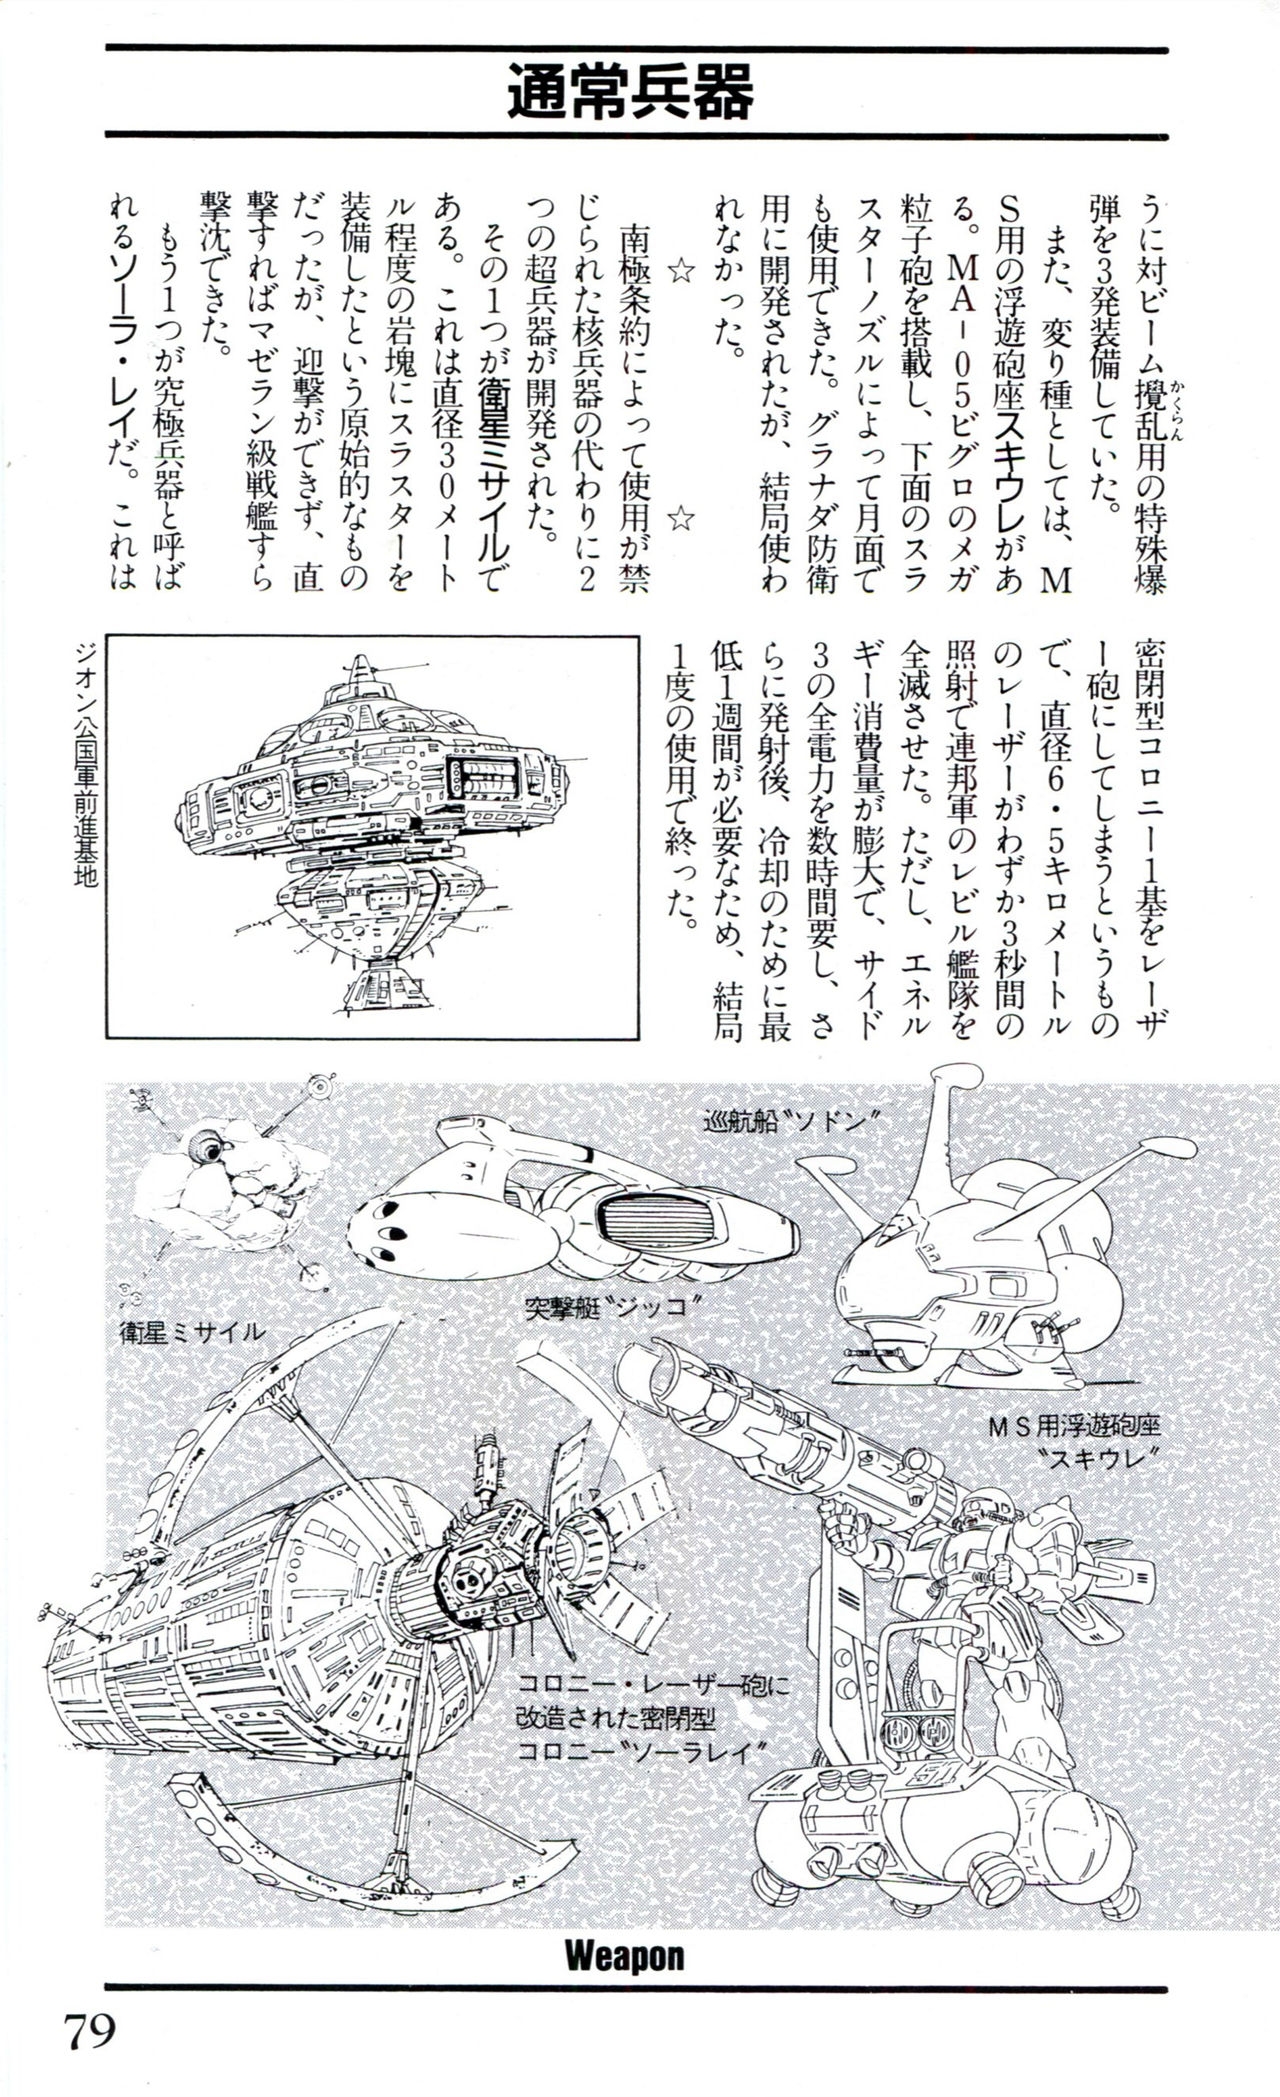 Mobile Suit Gundam U.C. Box MS Gundam Encyclopedia NO.01 - Mobile Suit Gundam 78